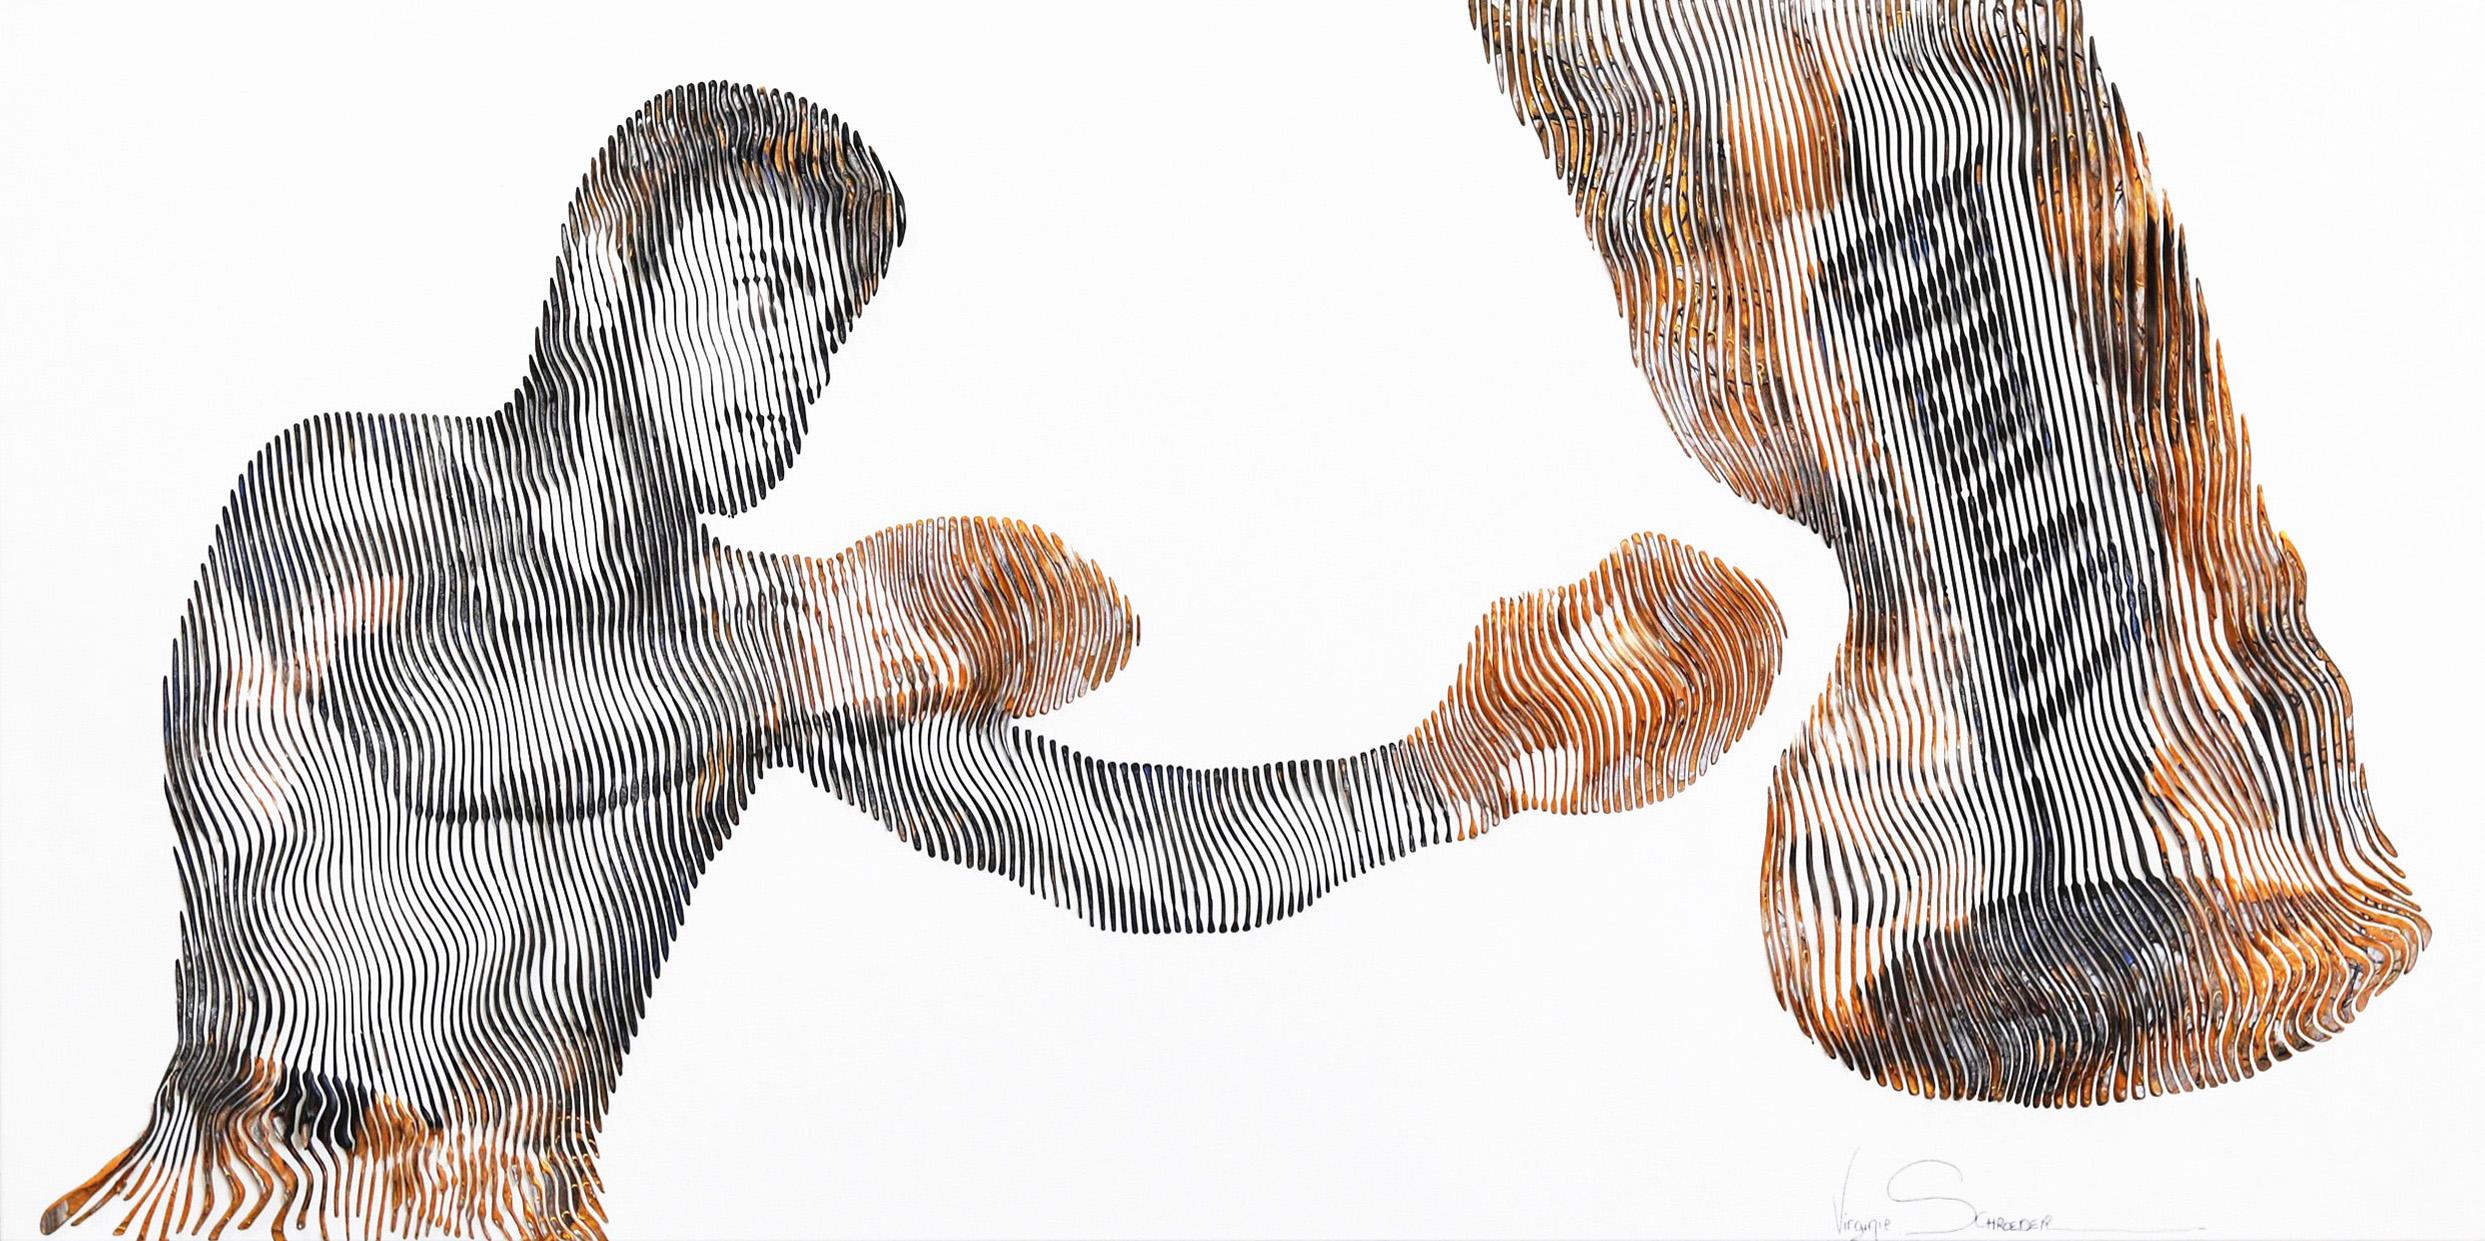 Muhammad Ali: The Legend of My Dreams